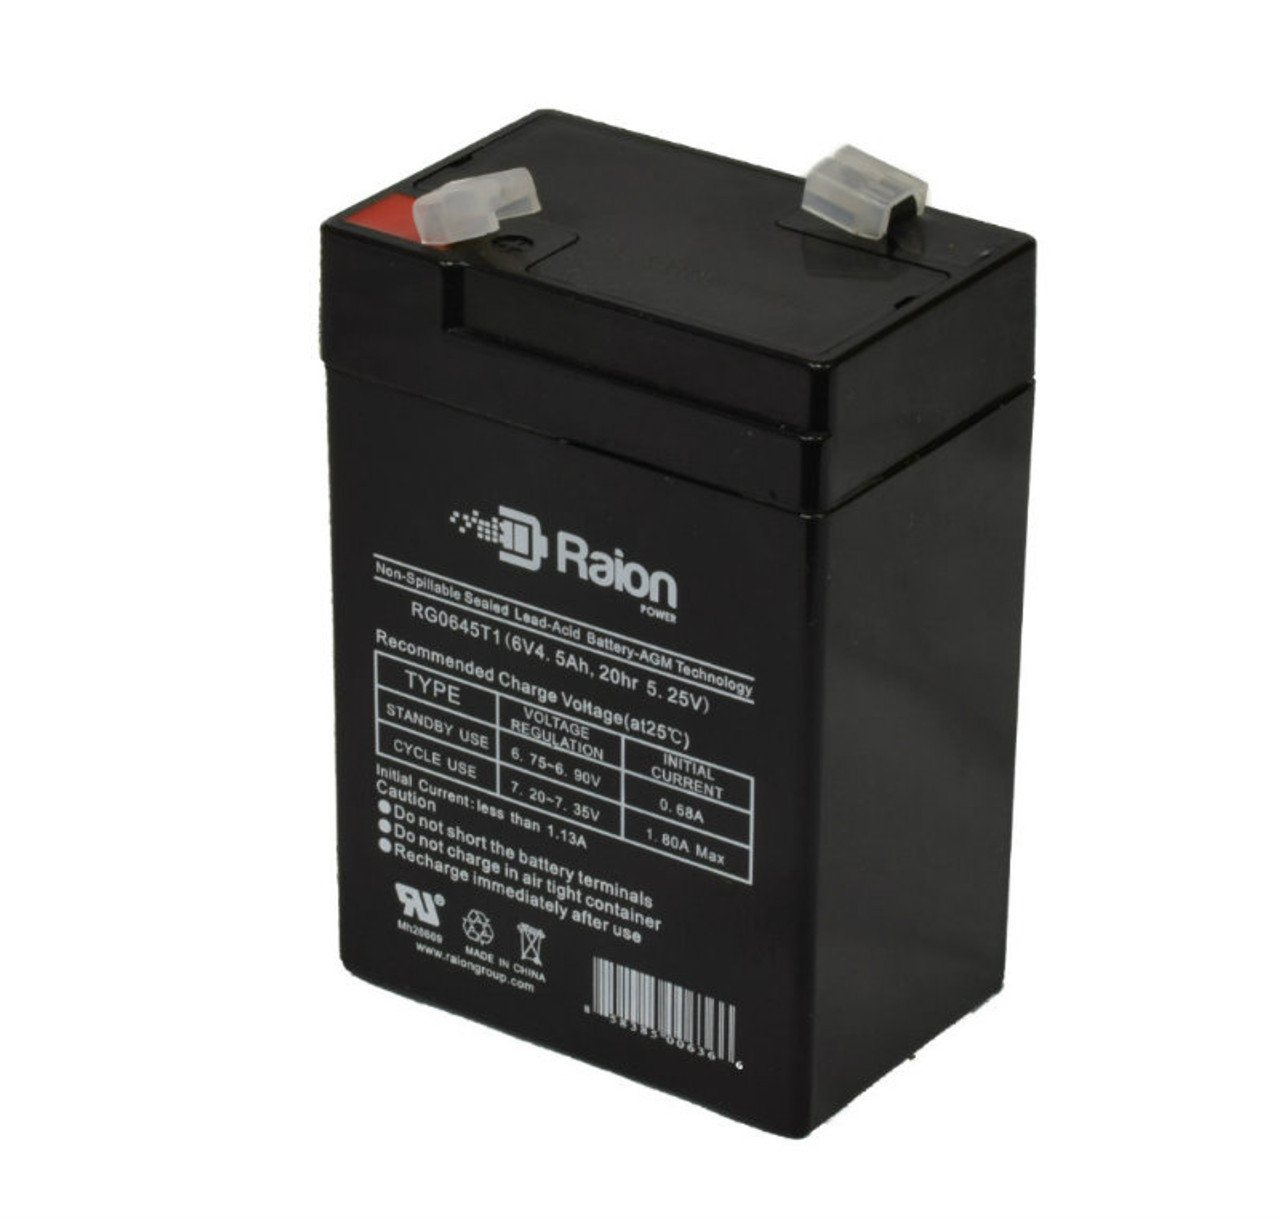 Raion Power RG0645T1 6V 4.5Ah Replacement Battery Cartridge for Wonderlanes 12724 Lil Backhoe